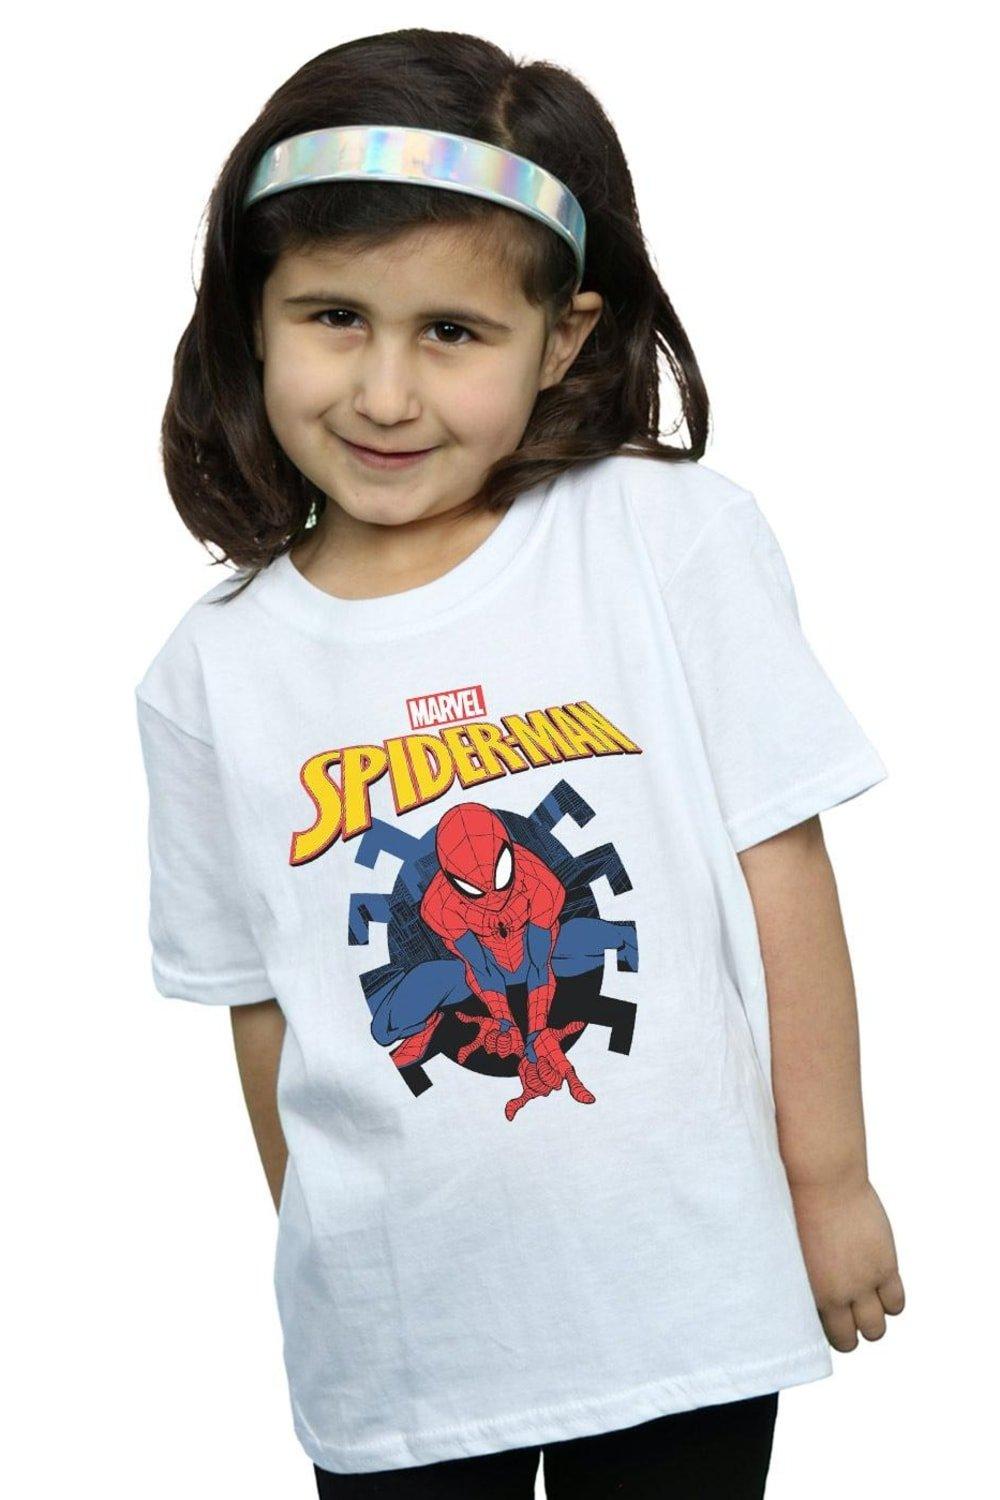 Spider-Man Web Shooting Emblem Logo Cotton T-Shirt